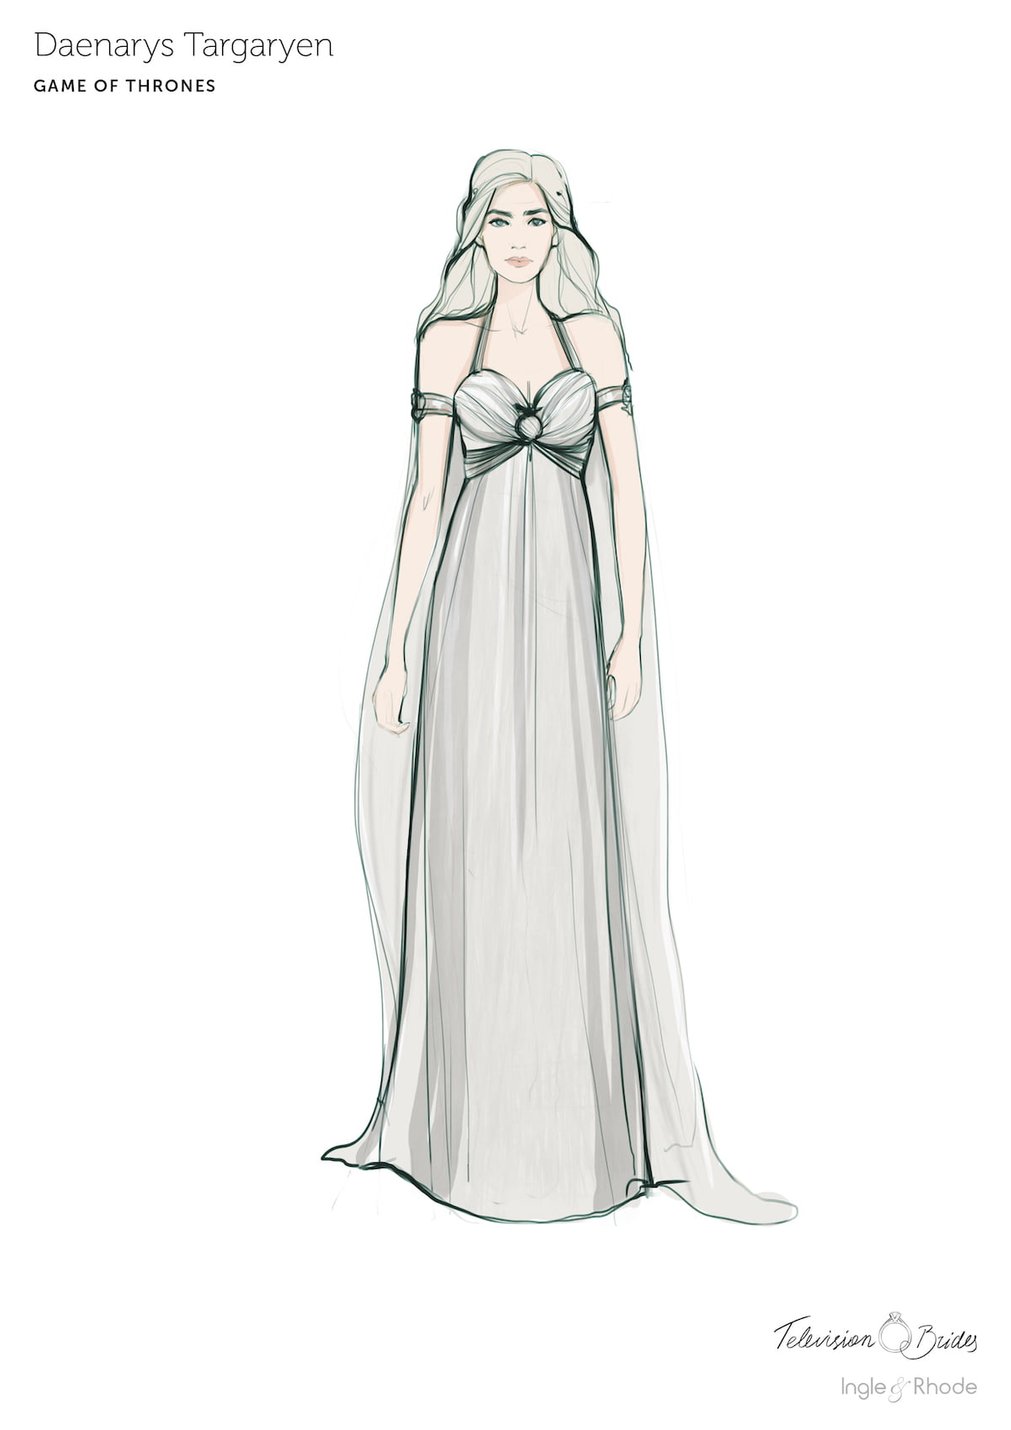 https://www.ingleandrhode.co.uk/files/6815/5540/7668/06_Game-of-Thrones-Daenarys-Targaryen-wedding-dress.jpg